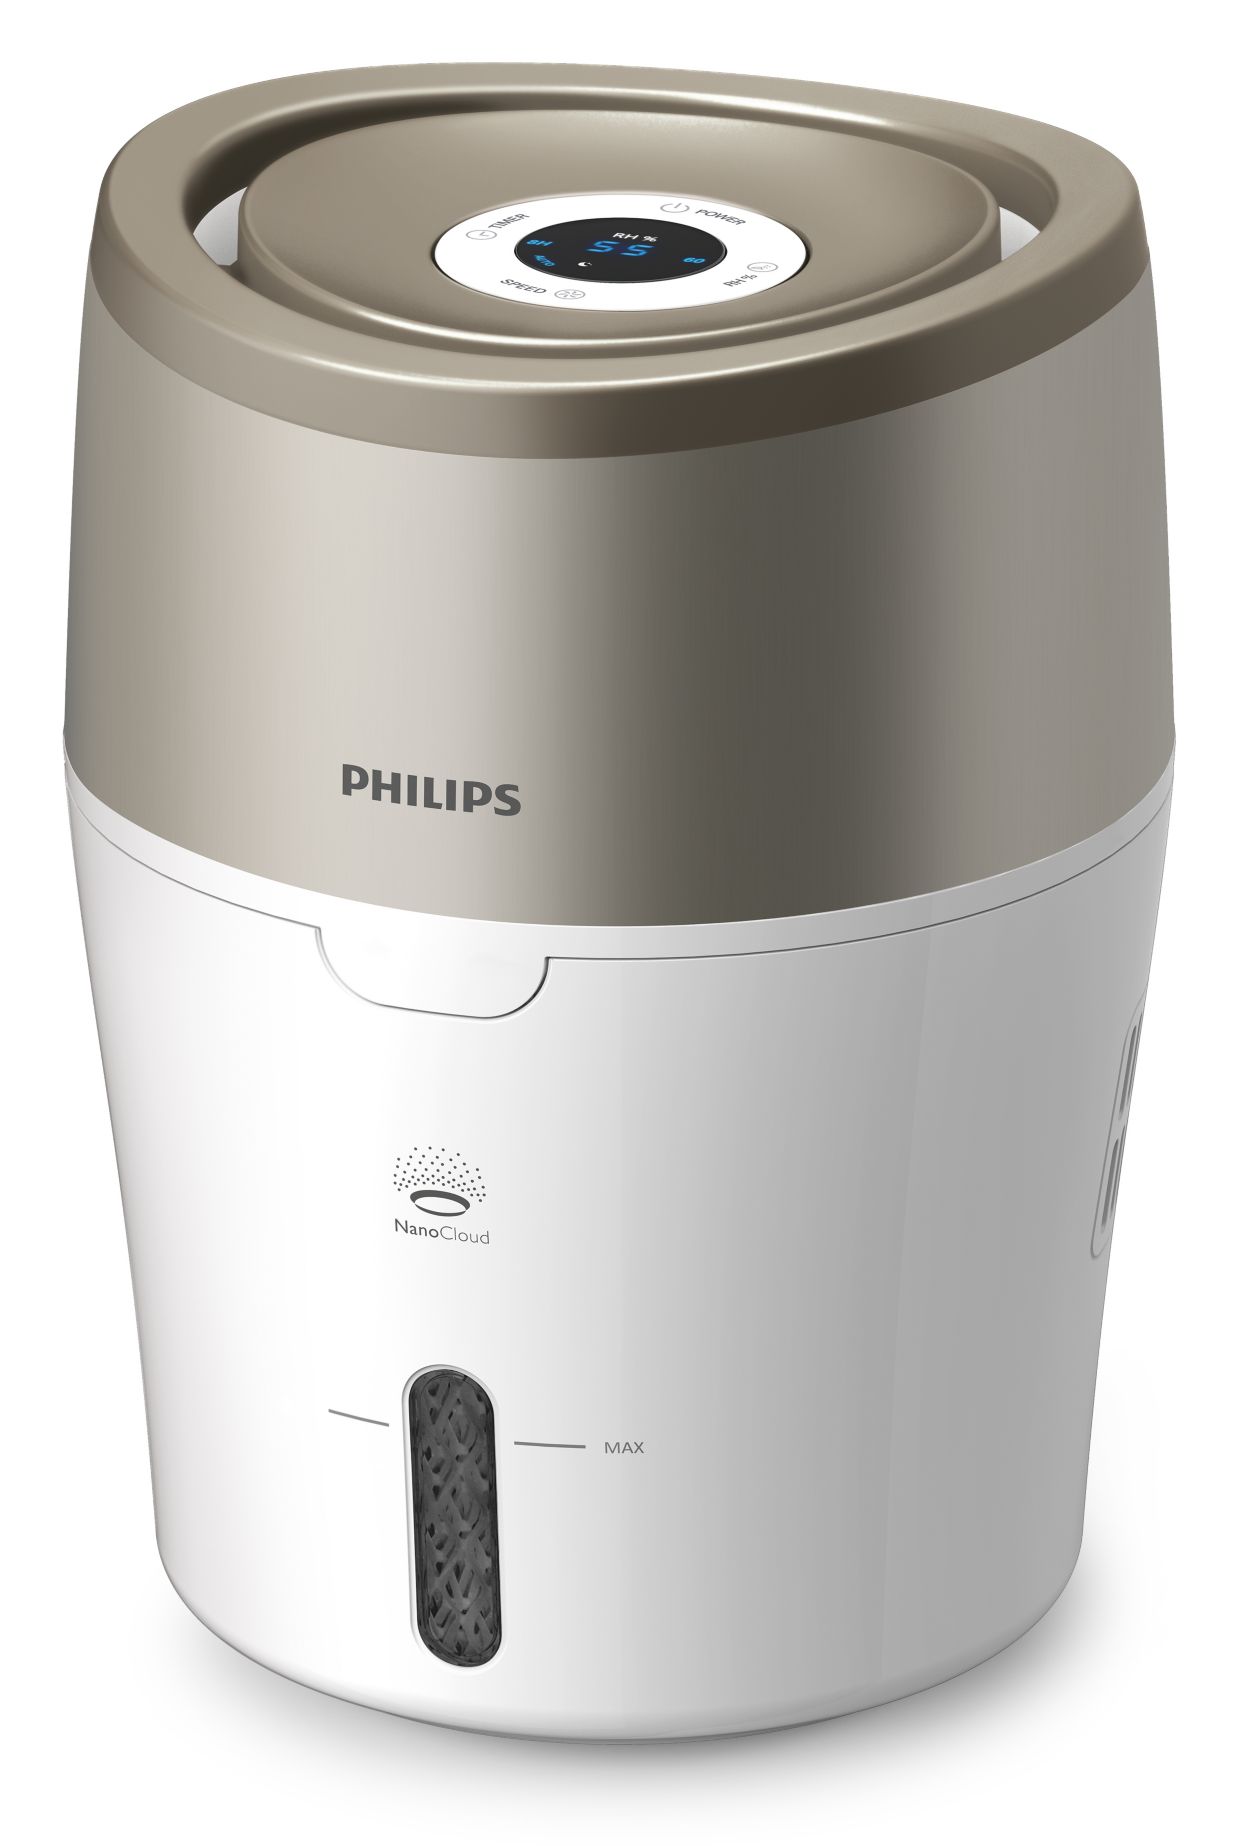 ② Humidificateur d'air Philips HU4813 — Équipement de traitement